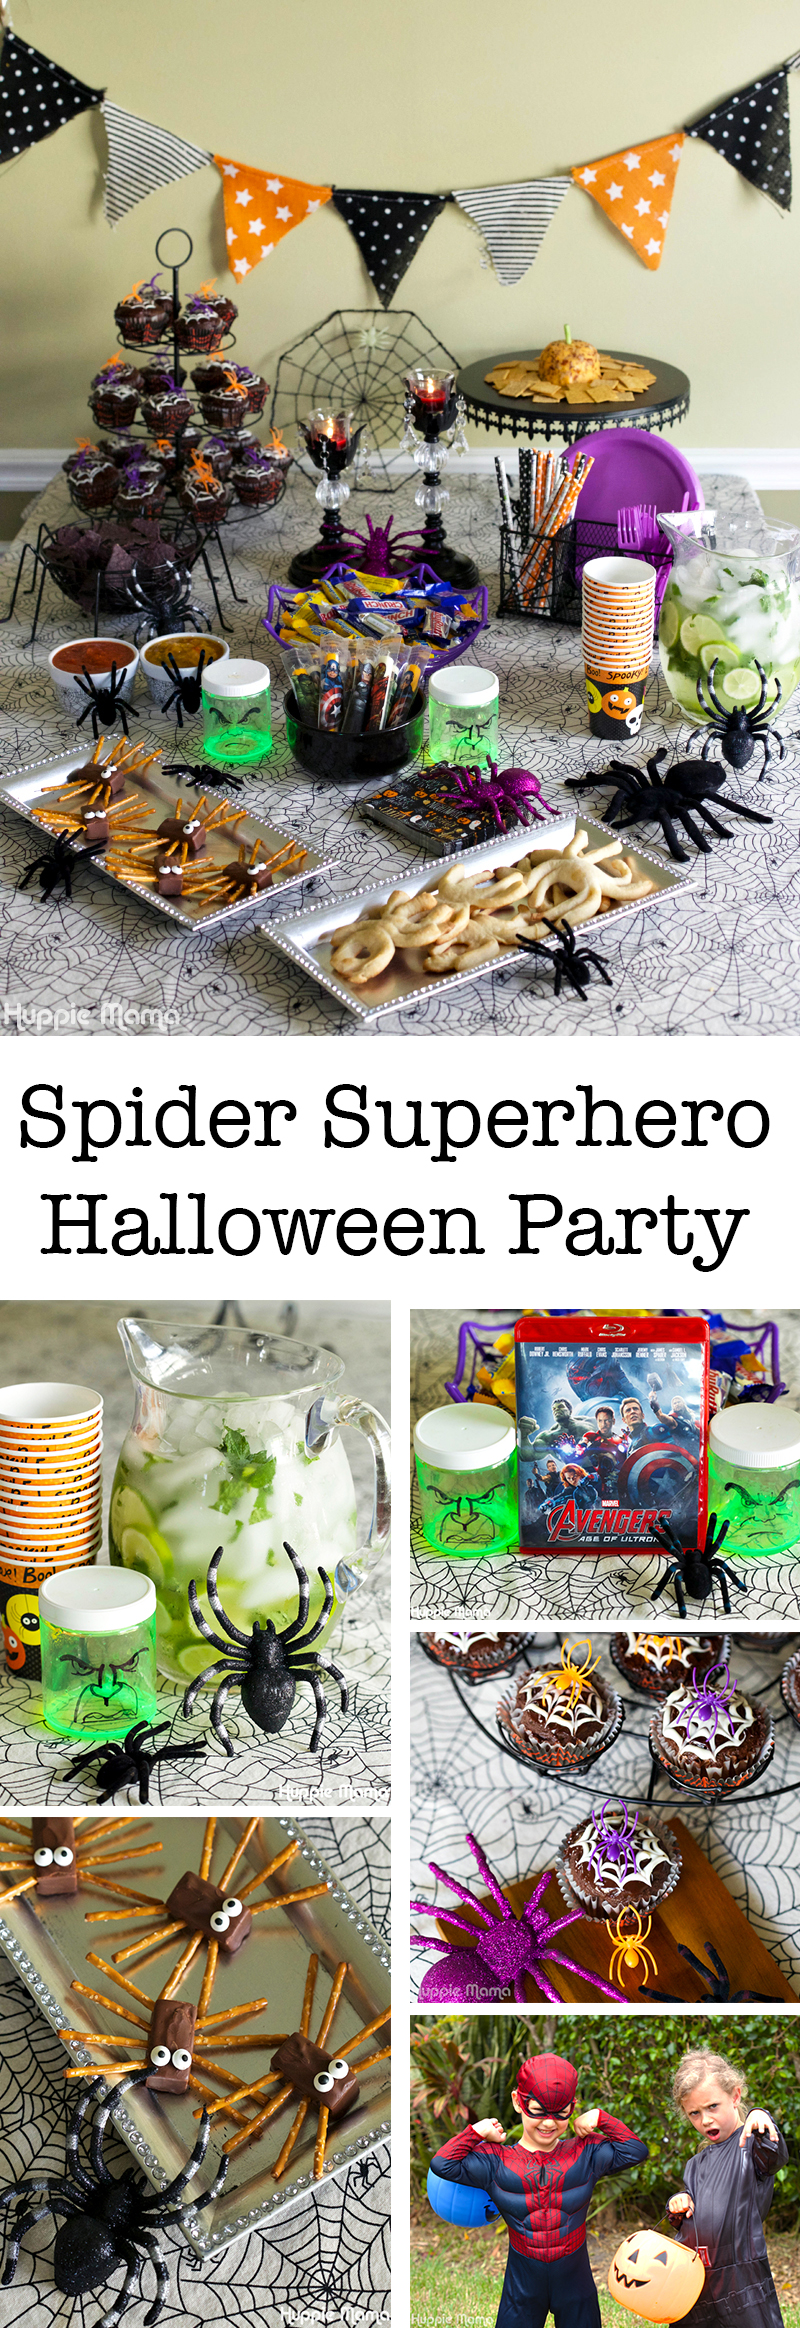 Spider Superhero Halloween Party ideas